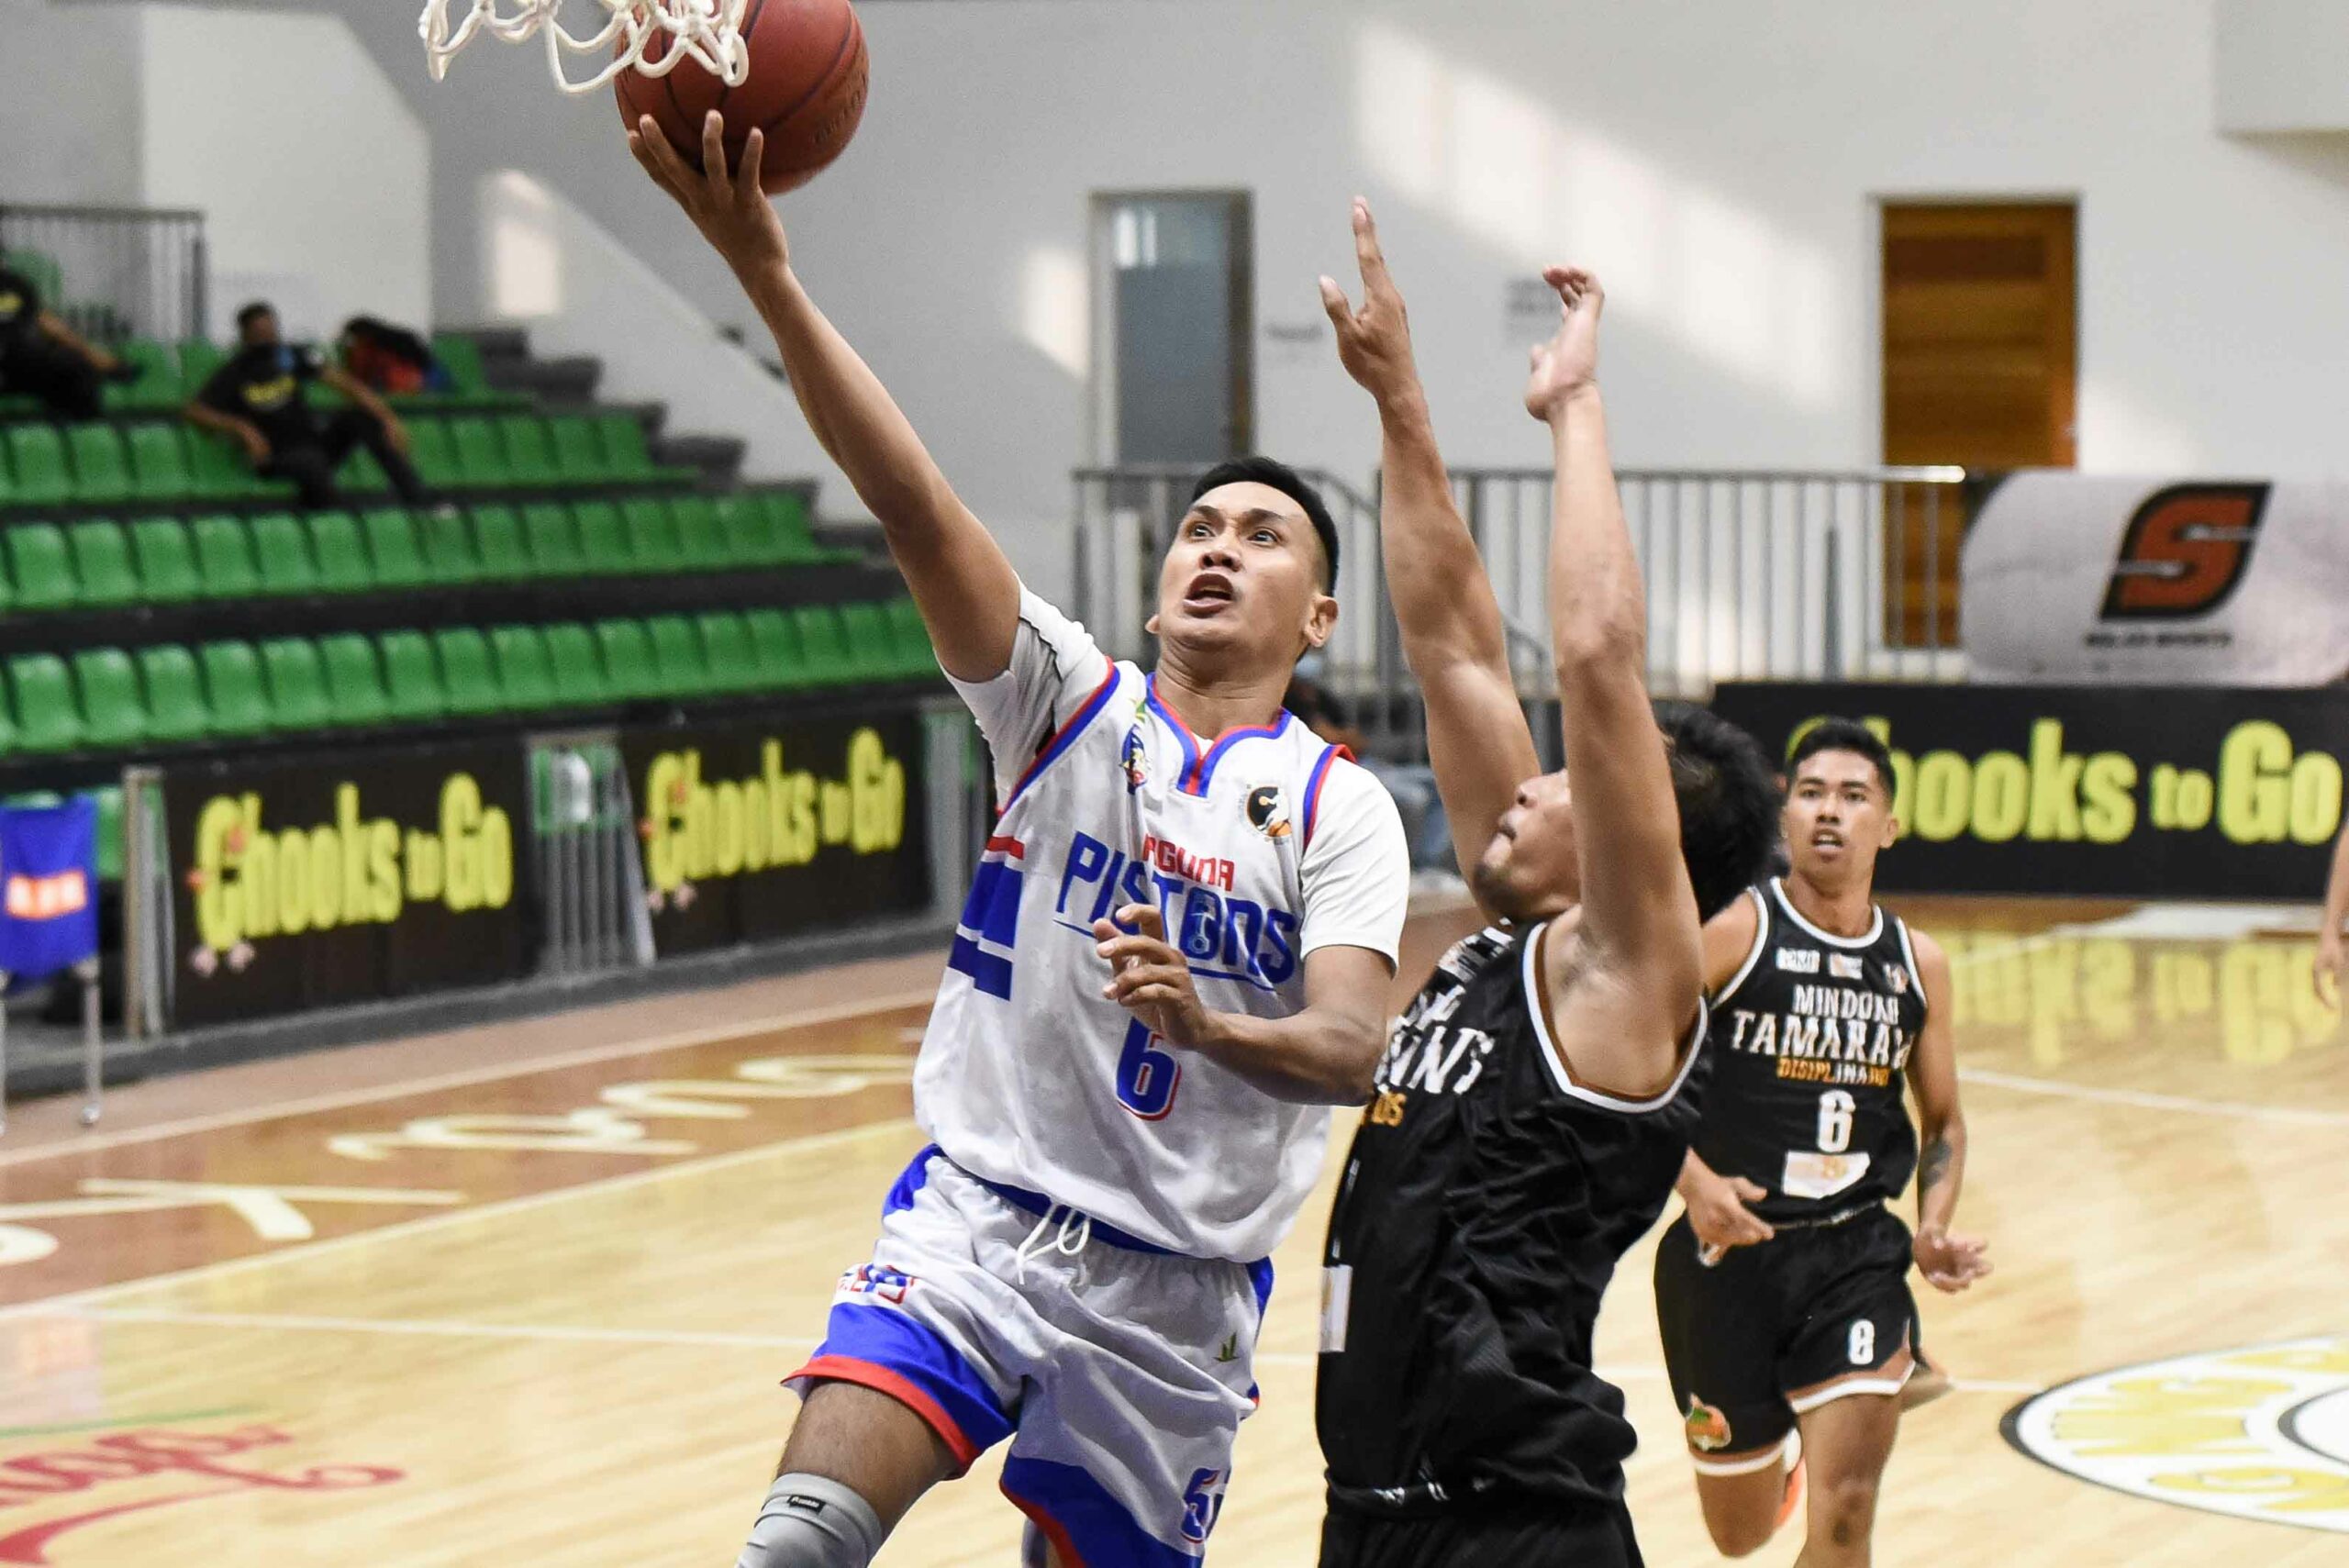 2021-Chooks-NBL-Laguna-vs-Mindoro-King-John-Fadriquela-Laguna-scaled NBL: Laguna snaps four-game skid, spoils Mindoro's rebrand Basketball NBL News  - philippine sports news